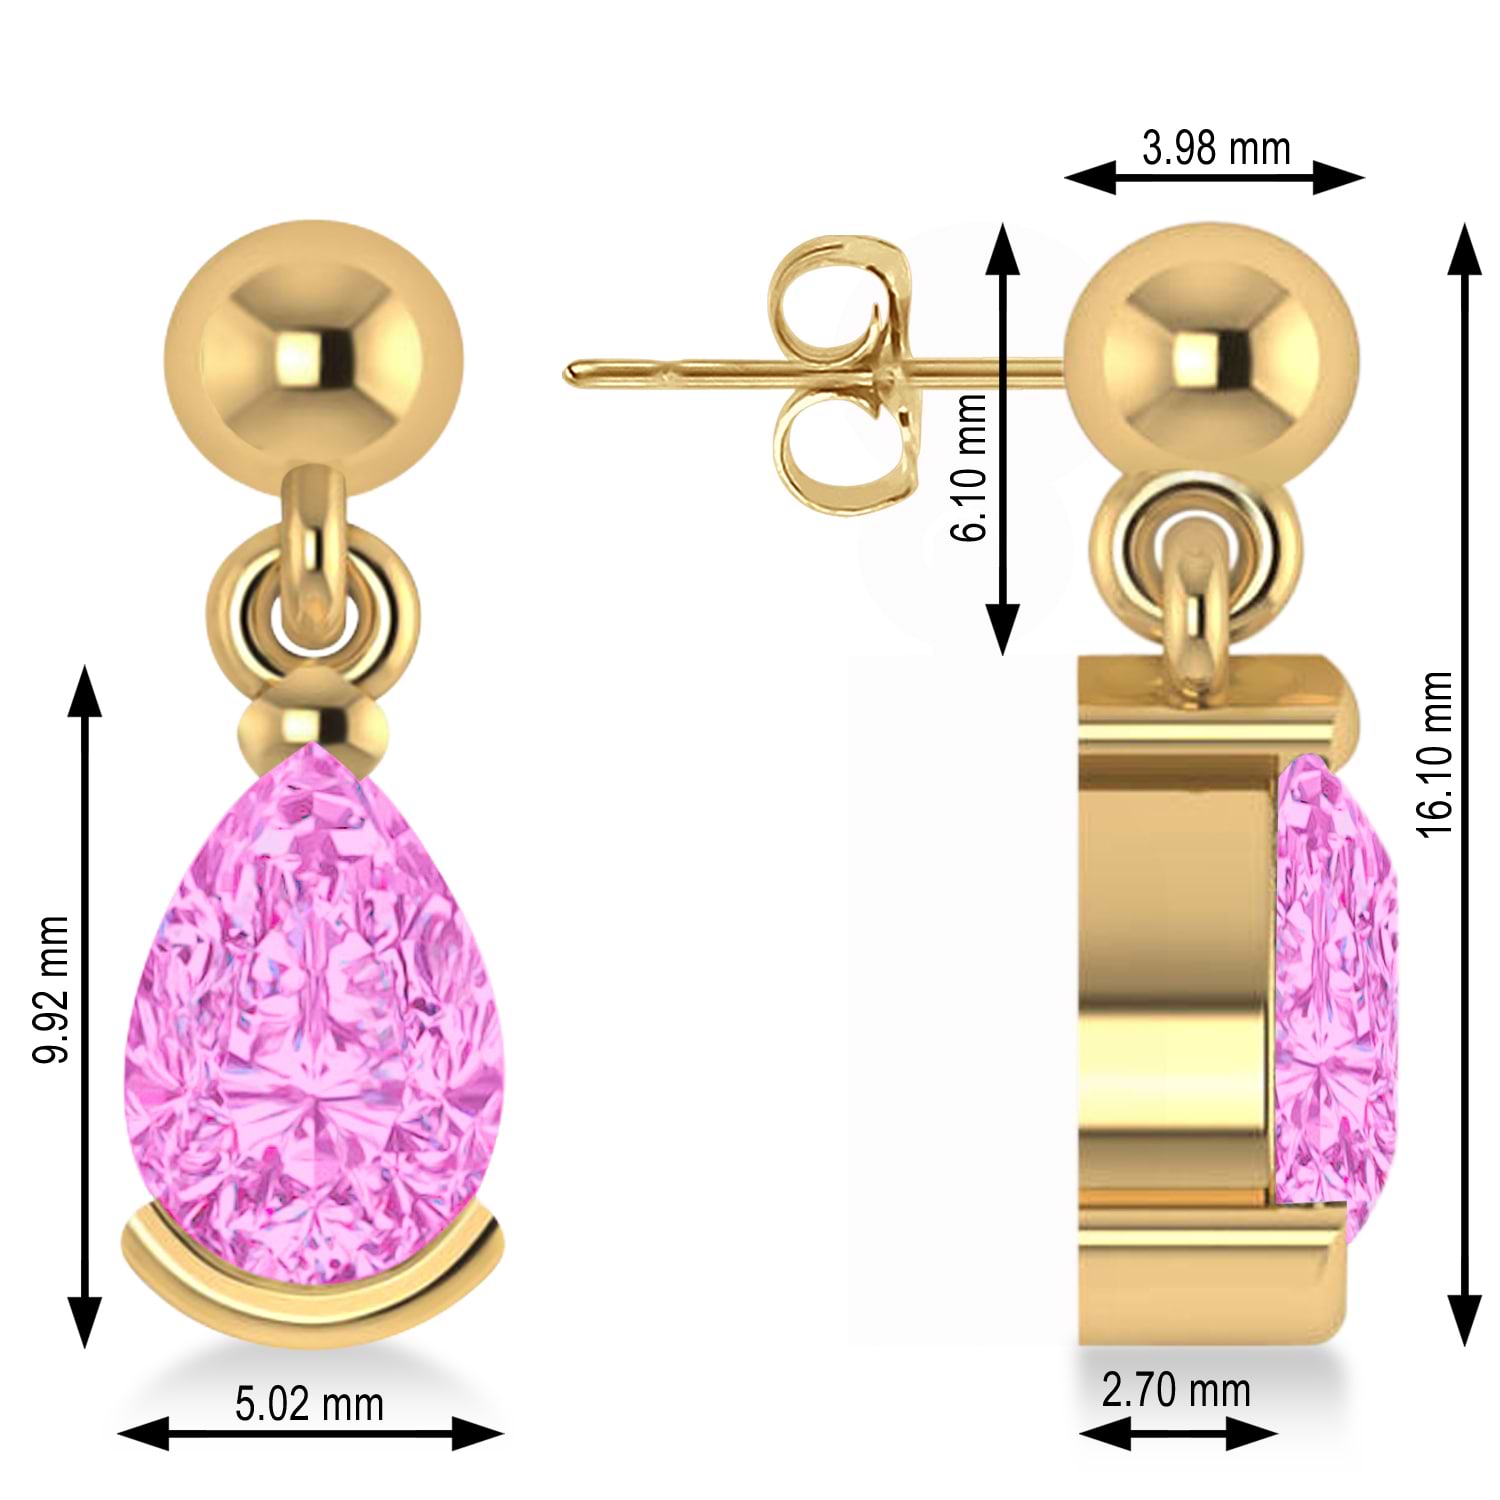 Pink Sapphire Dangling Pear Earrings 14k Yellow Gold (2.00ct)